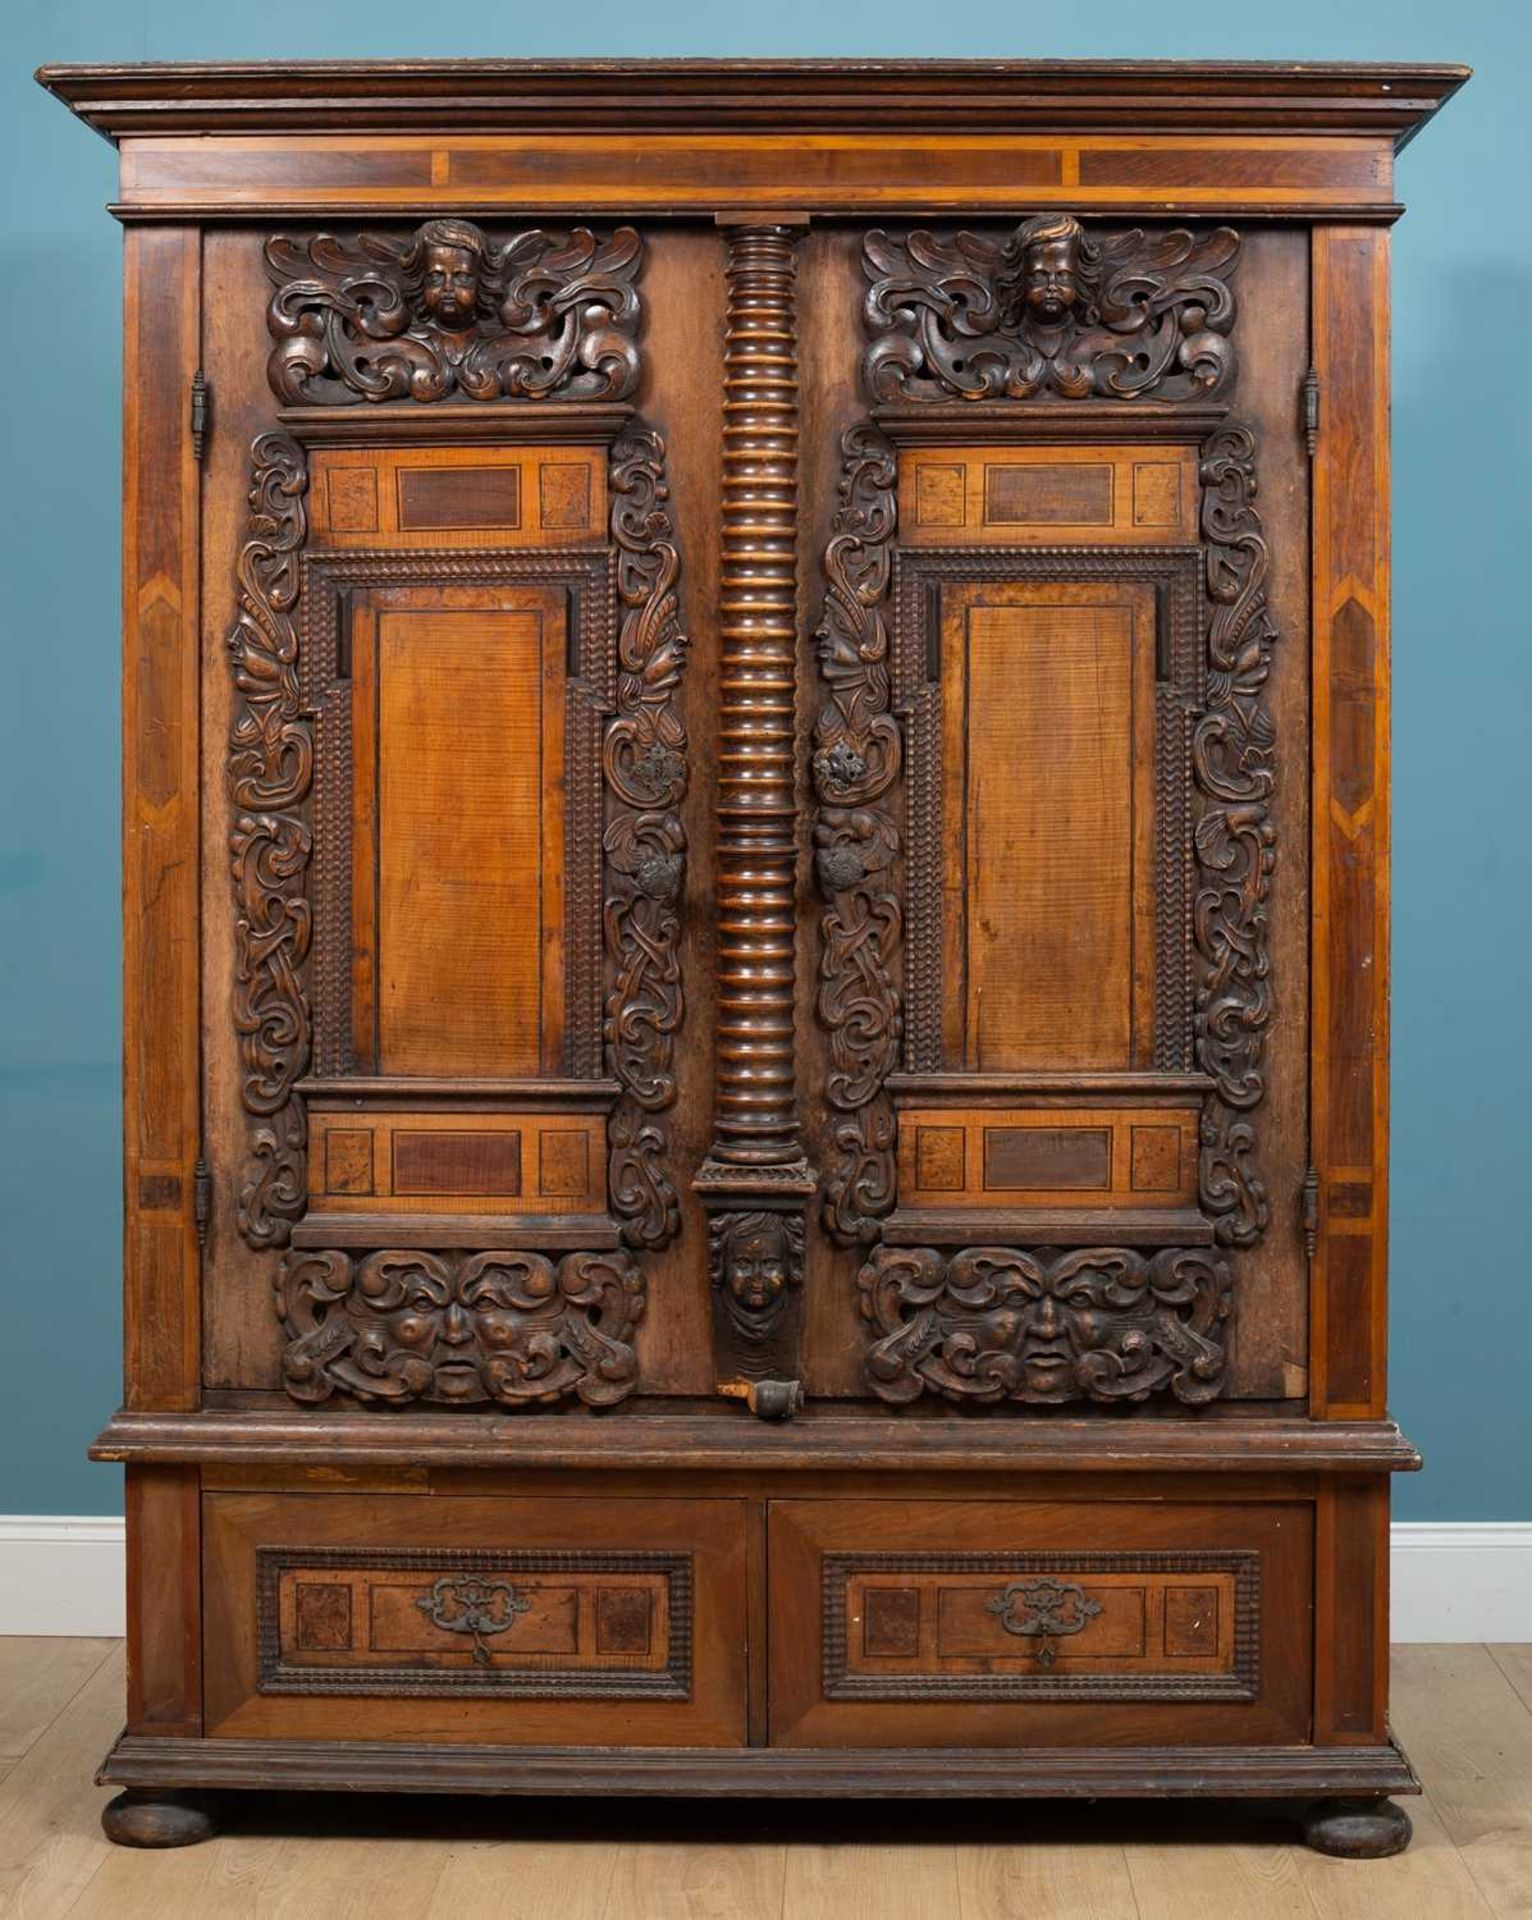 An 18th century style European armoire